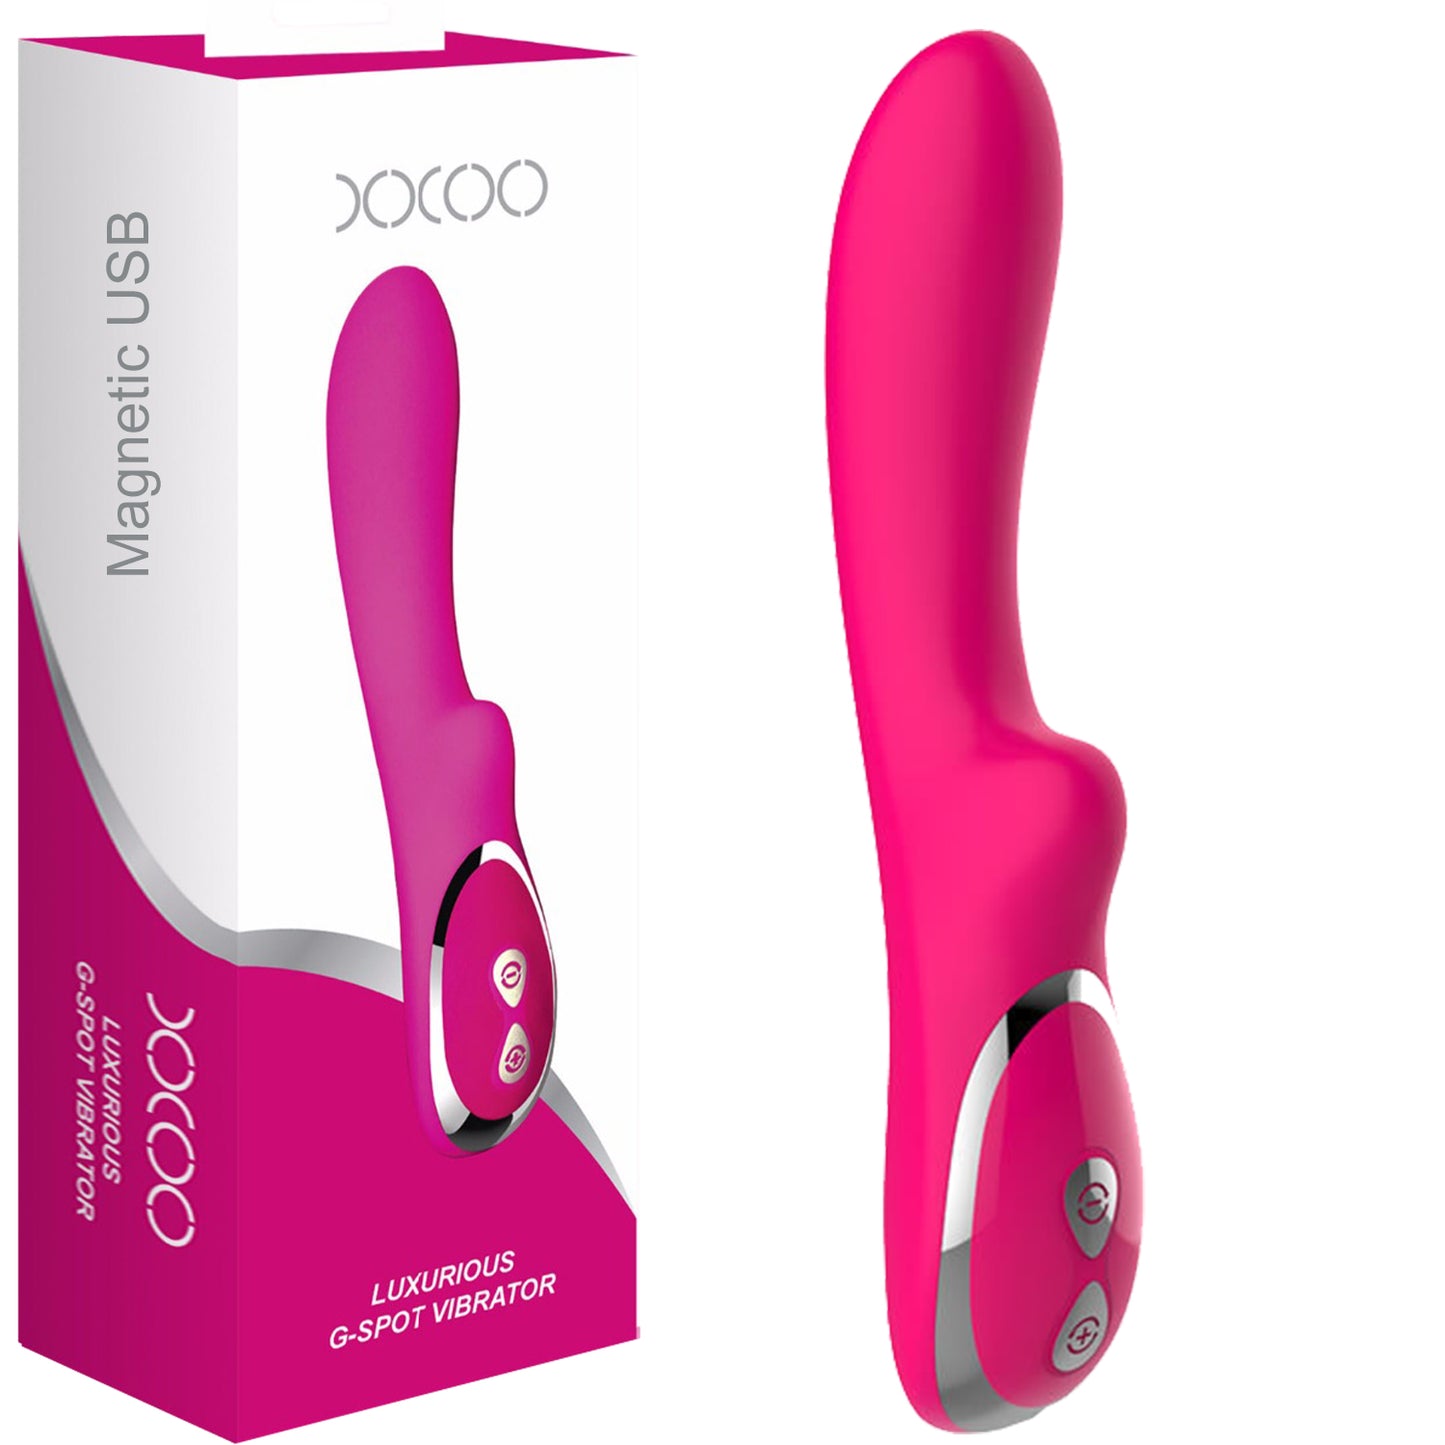 XXOO G-Spot Vibrator Flexible Rabbit Magnetic USB Rechargeable Female Sex Toy